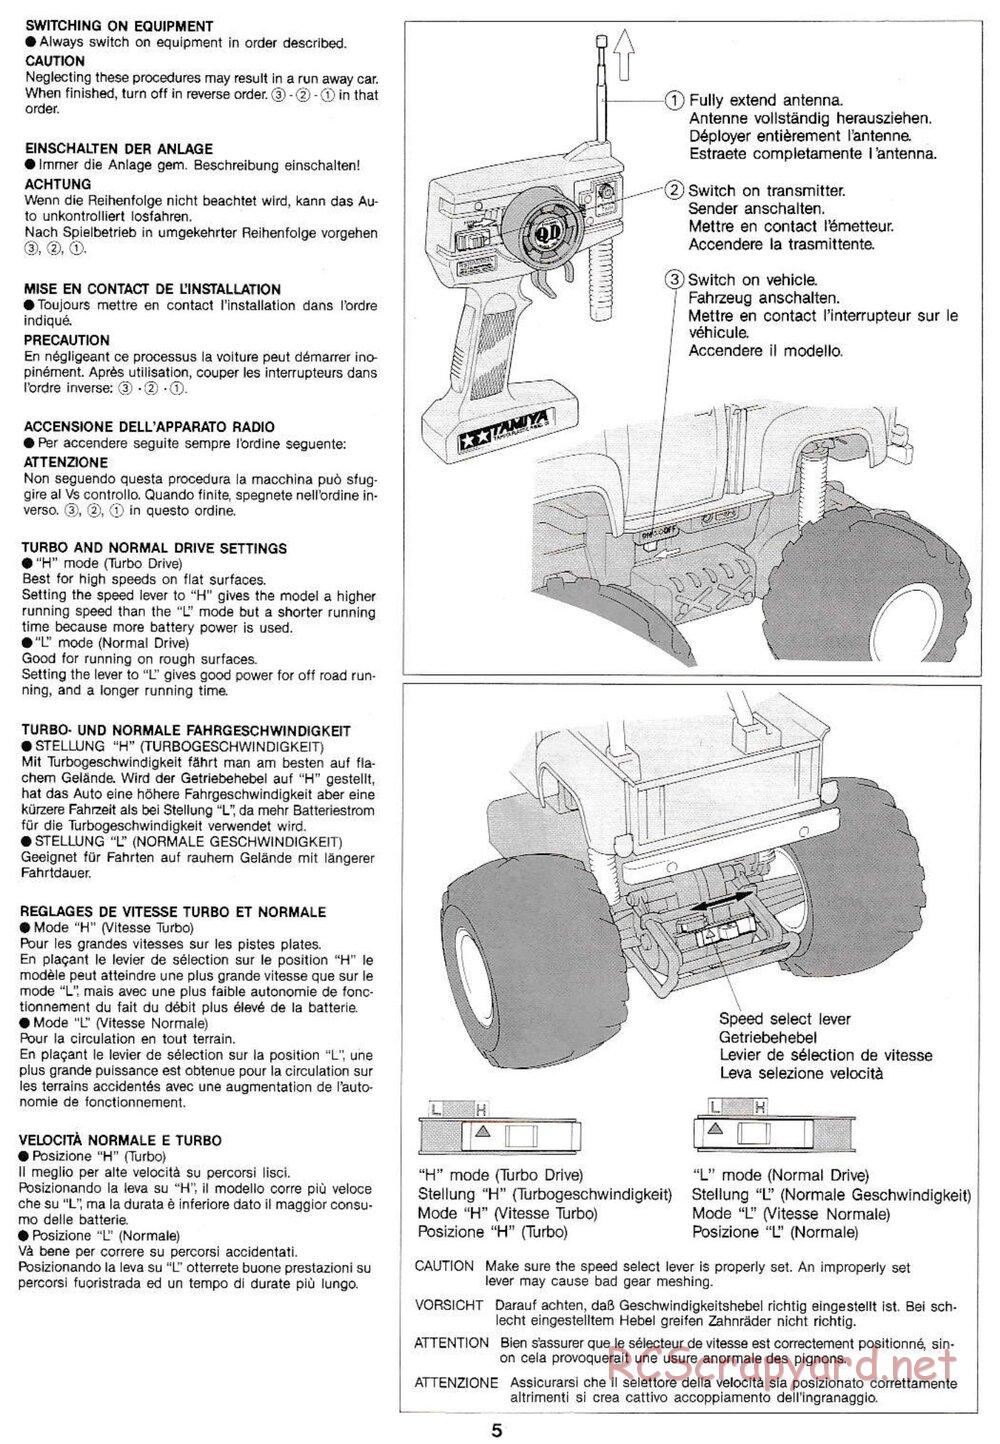 Tamiya - Midnight Pumpkin QD Chassis - Manual - Page 5